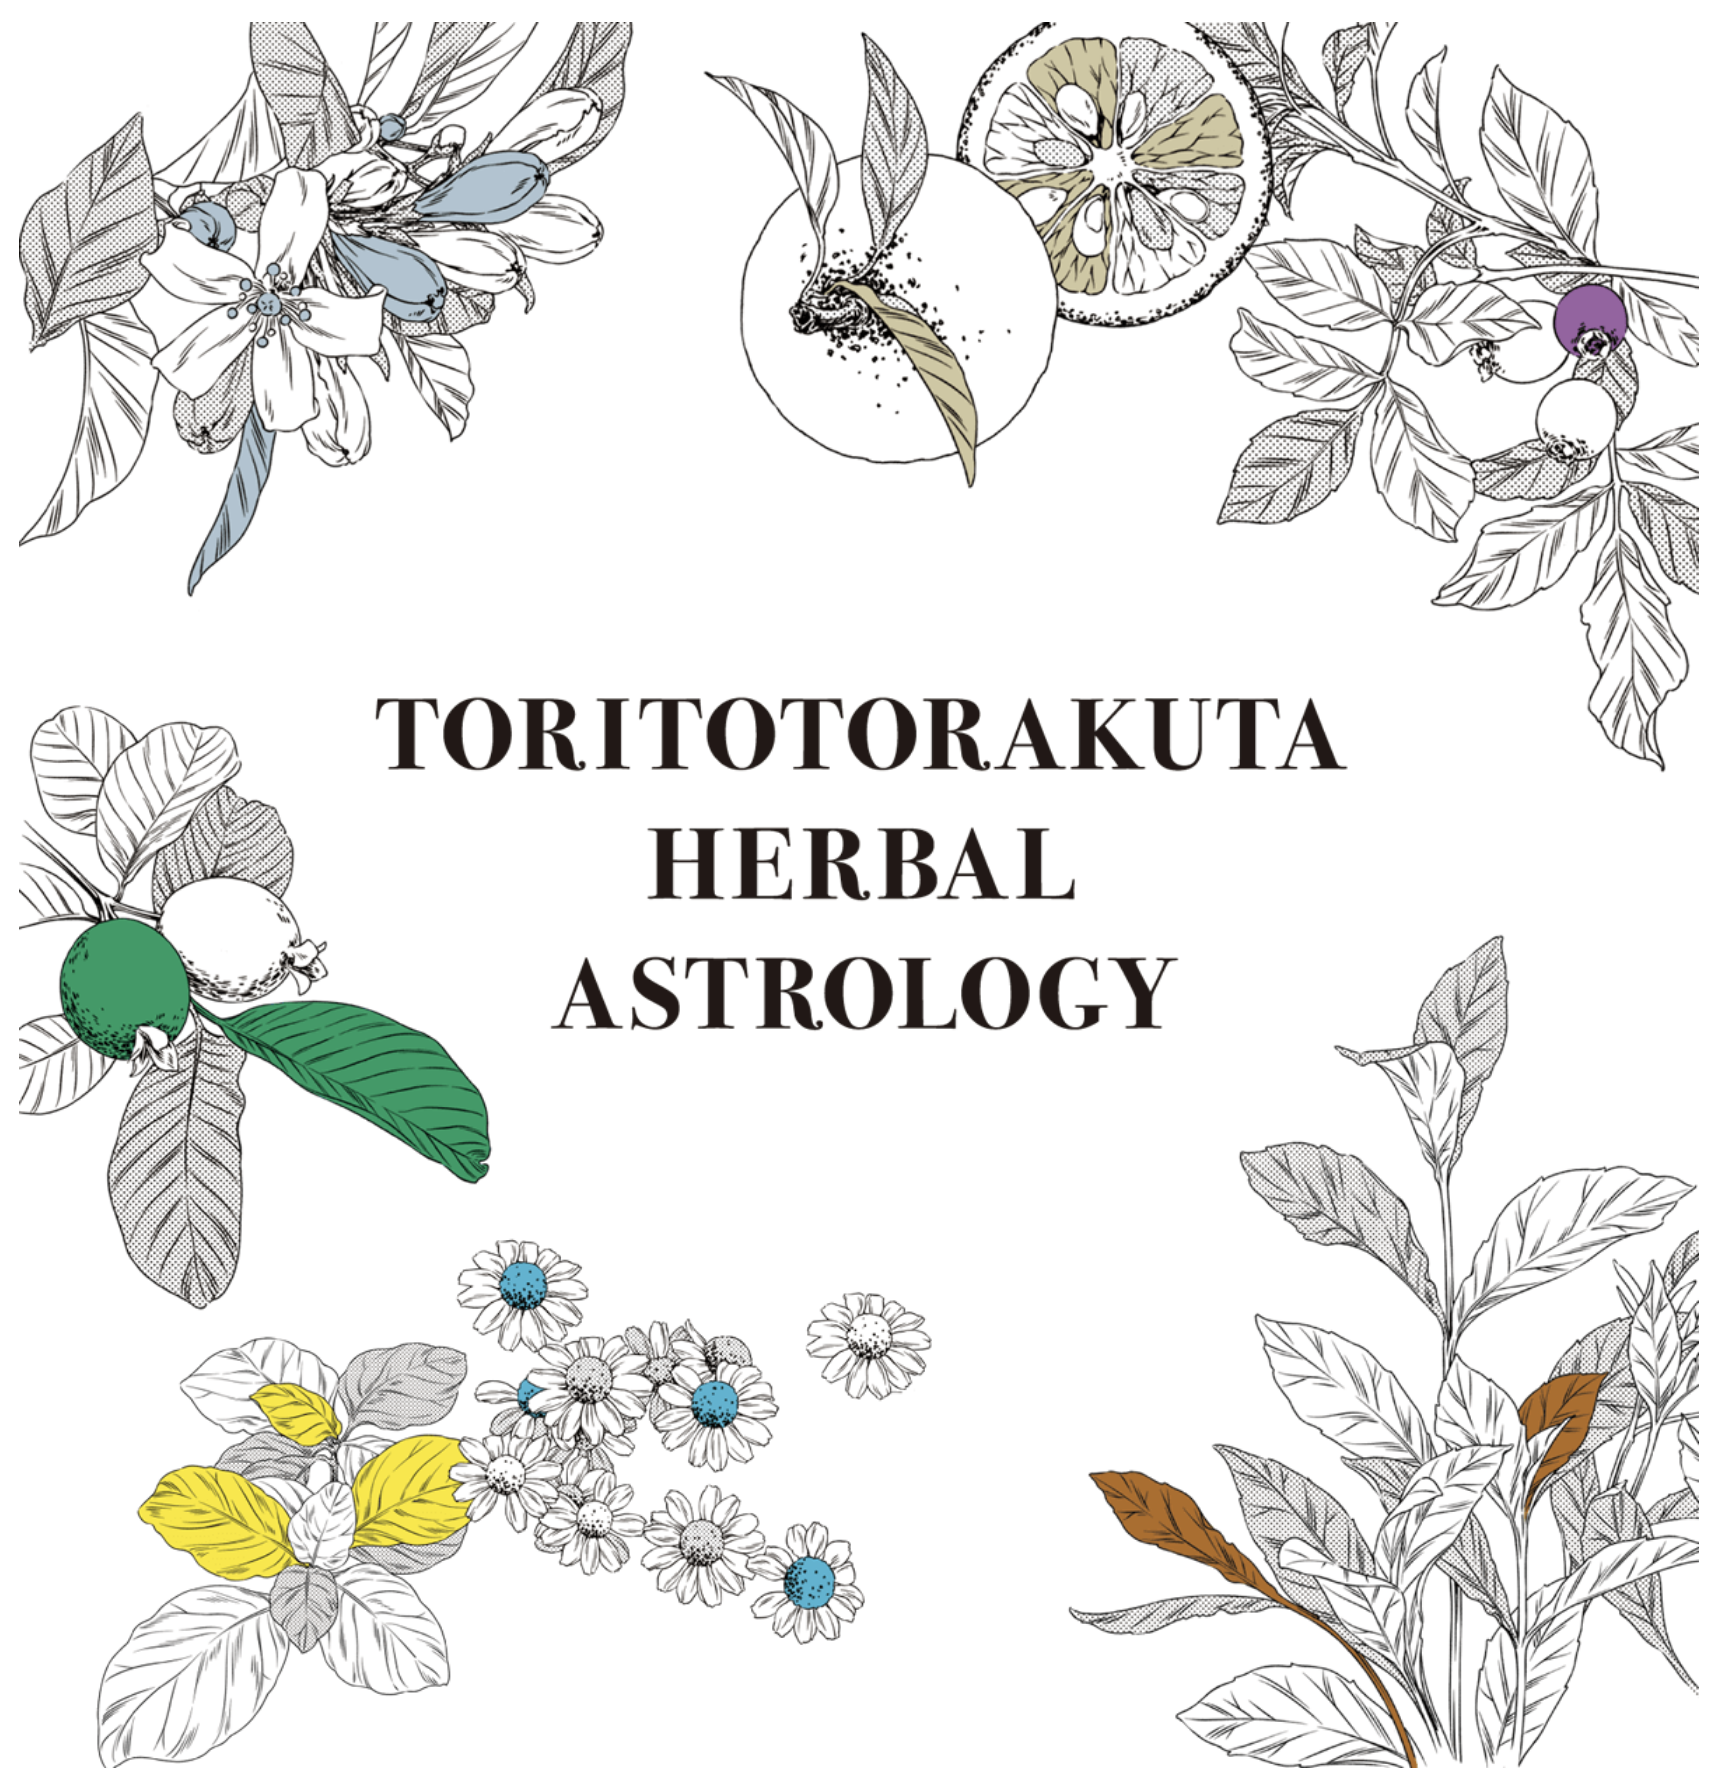 TORITOTORAKUTA HERBAL ASTROLOGY